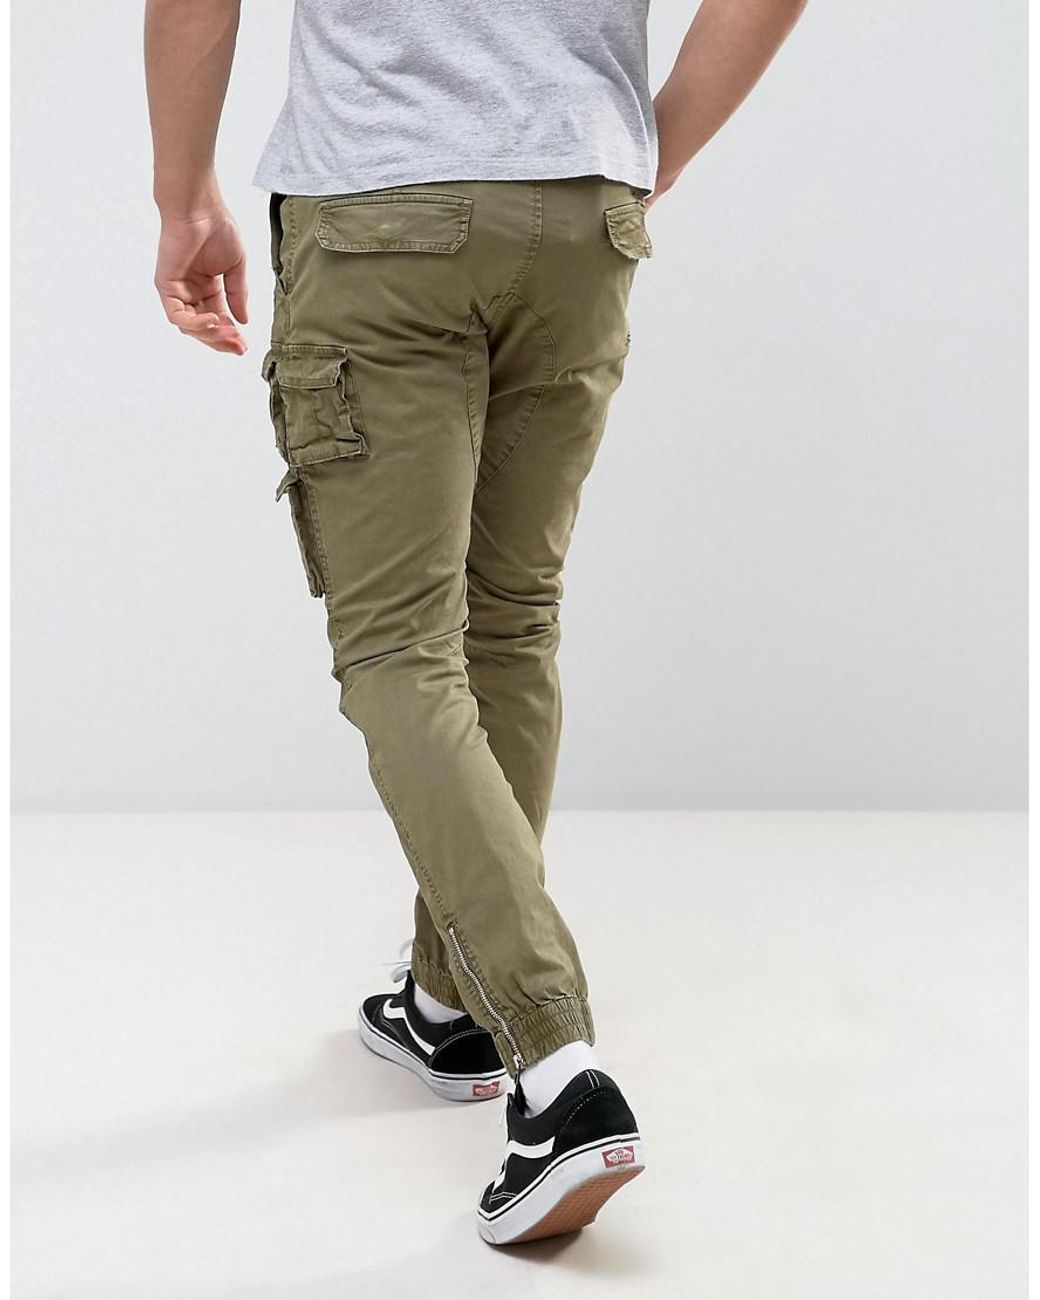 Replay Engineered Cargo Pants  Mens pants fashion Cargo pants Denim  jeans men